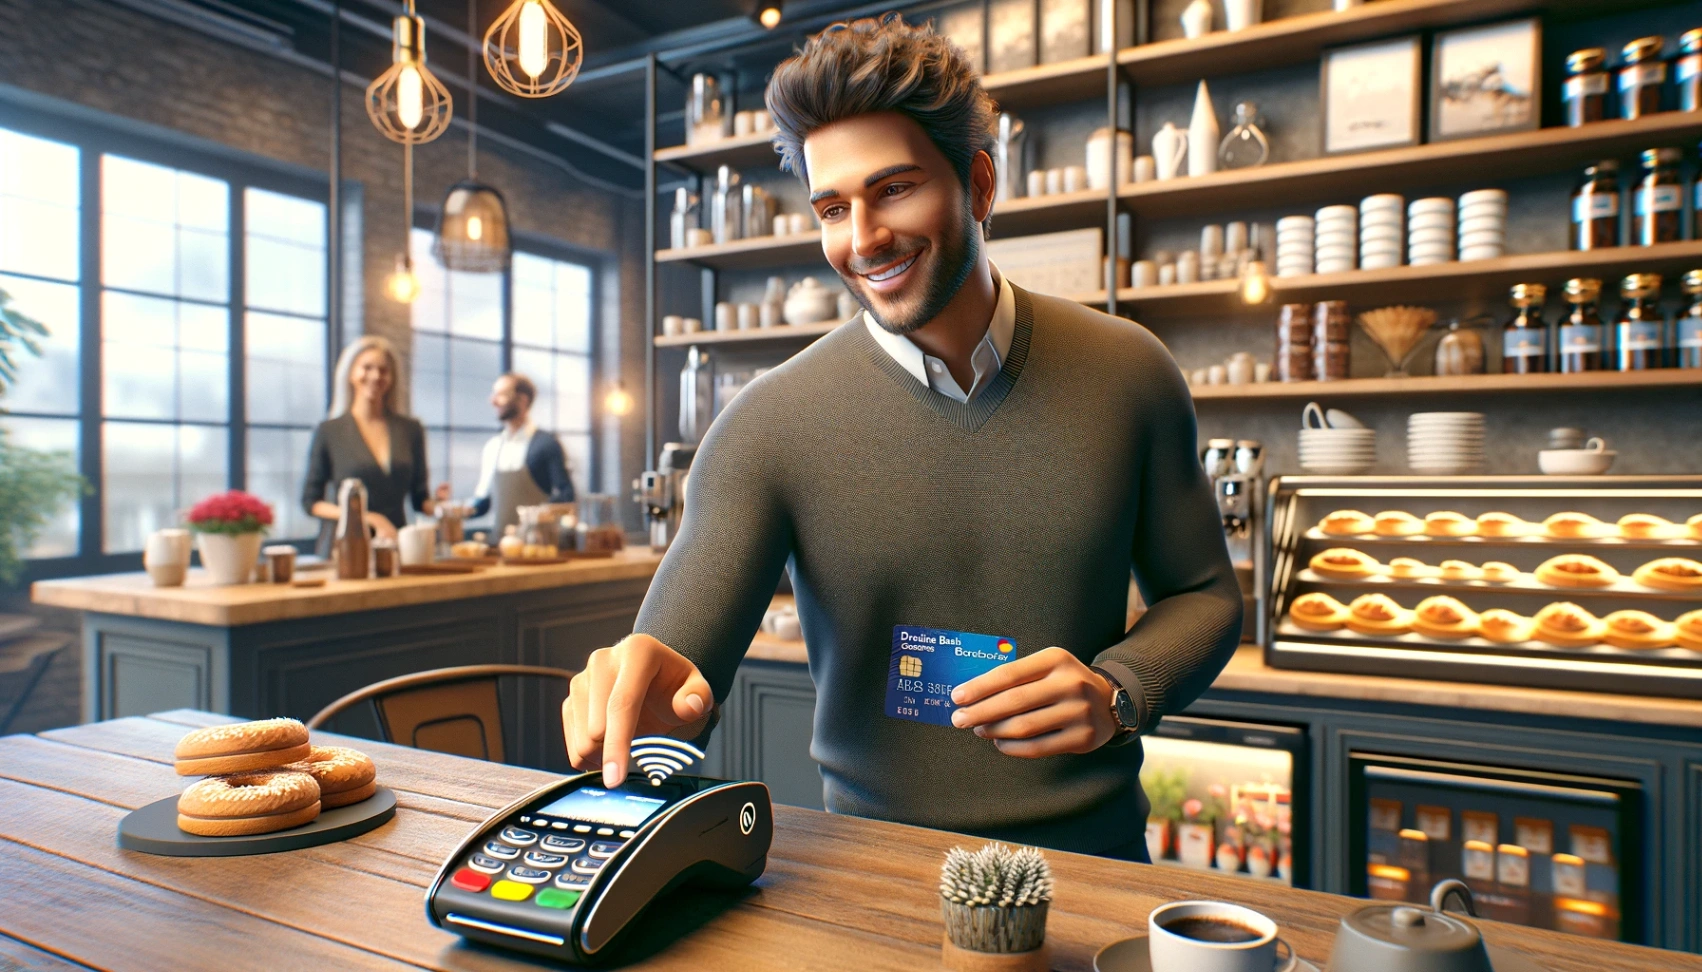 Deutsche Bank Mastercard Standard - How to Apply Online